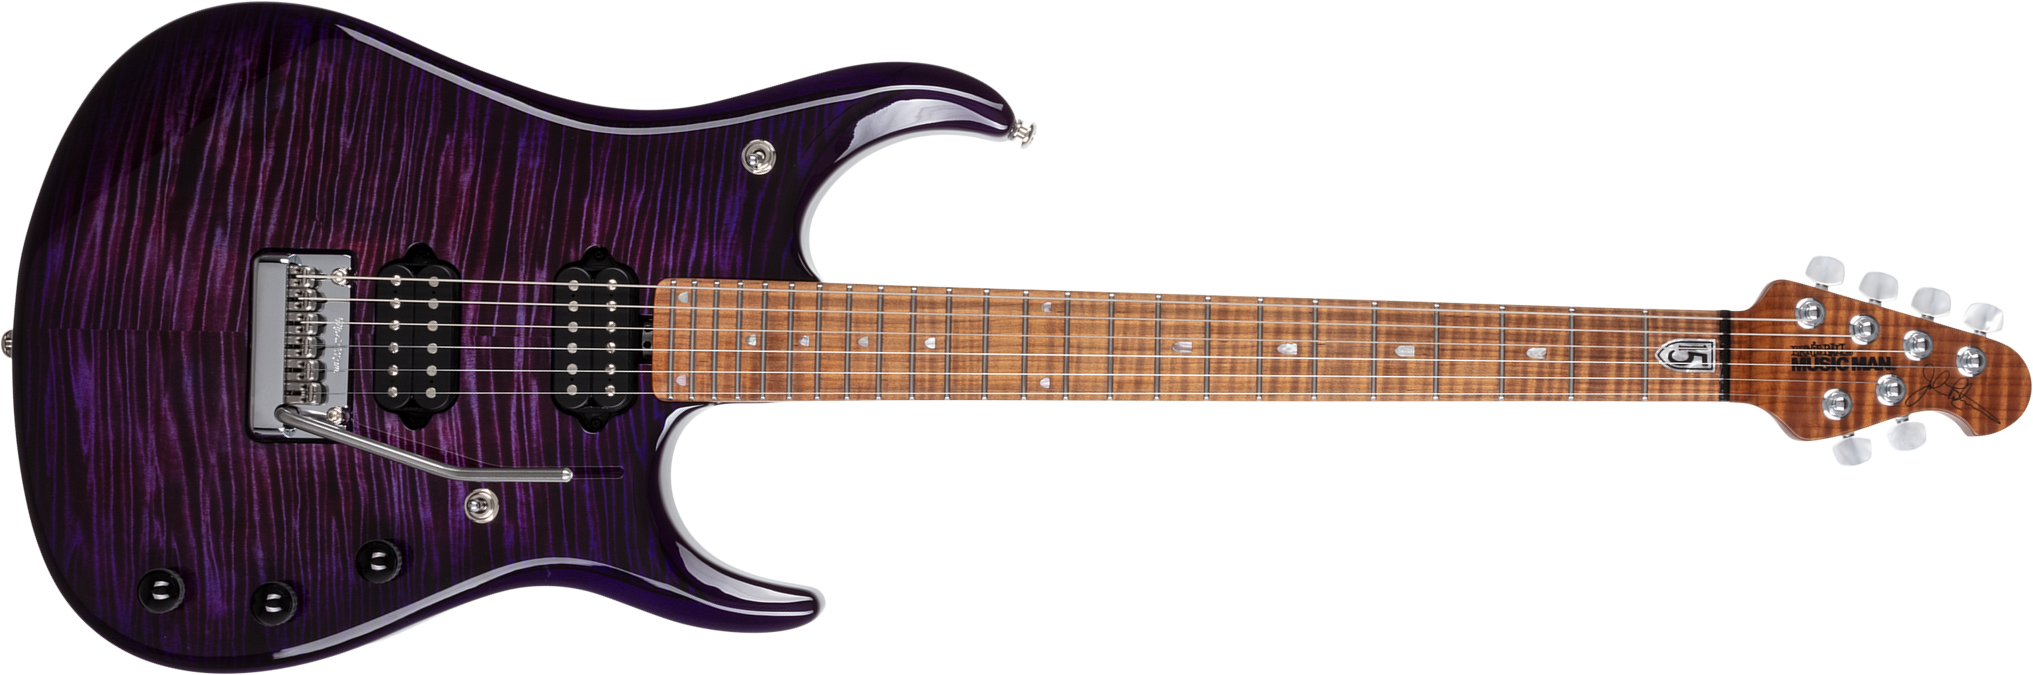 Music Man John Petrucci Jp15 Signature 2h Dimarzio Piezo Trem Mn +housse - Purple Nebula Flame Top - Metal electric guitar - Main picture